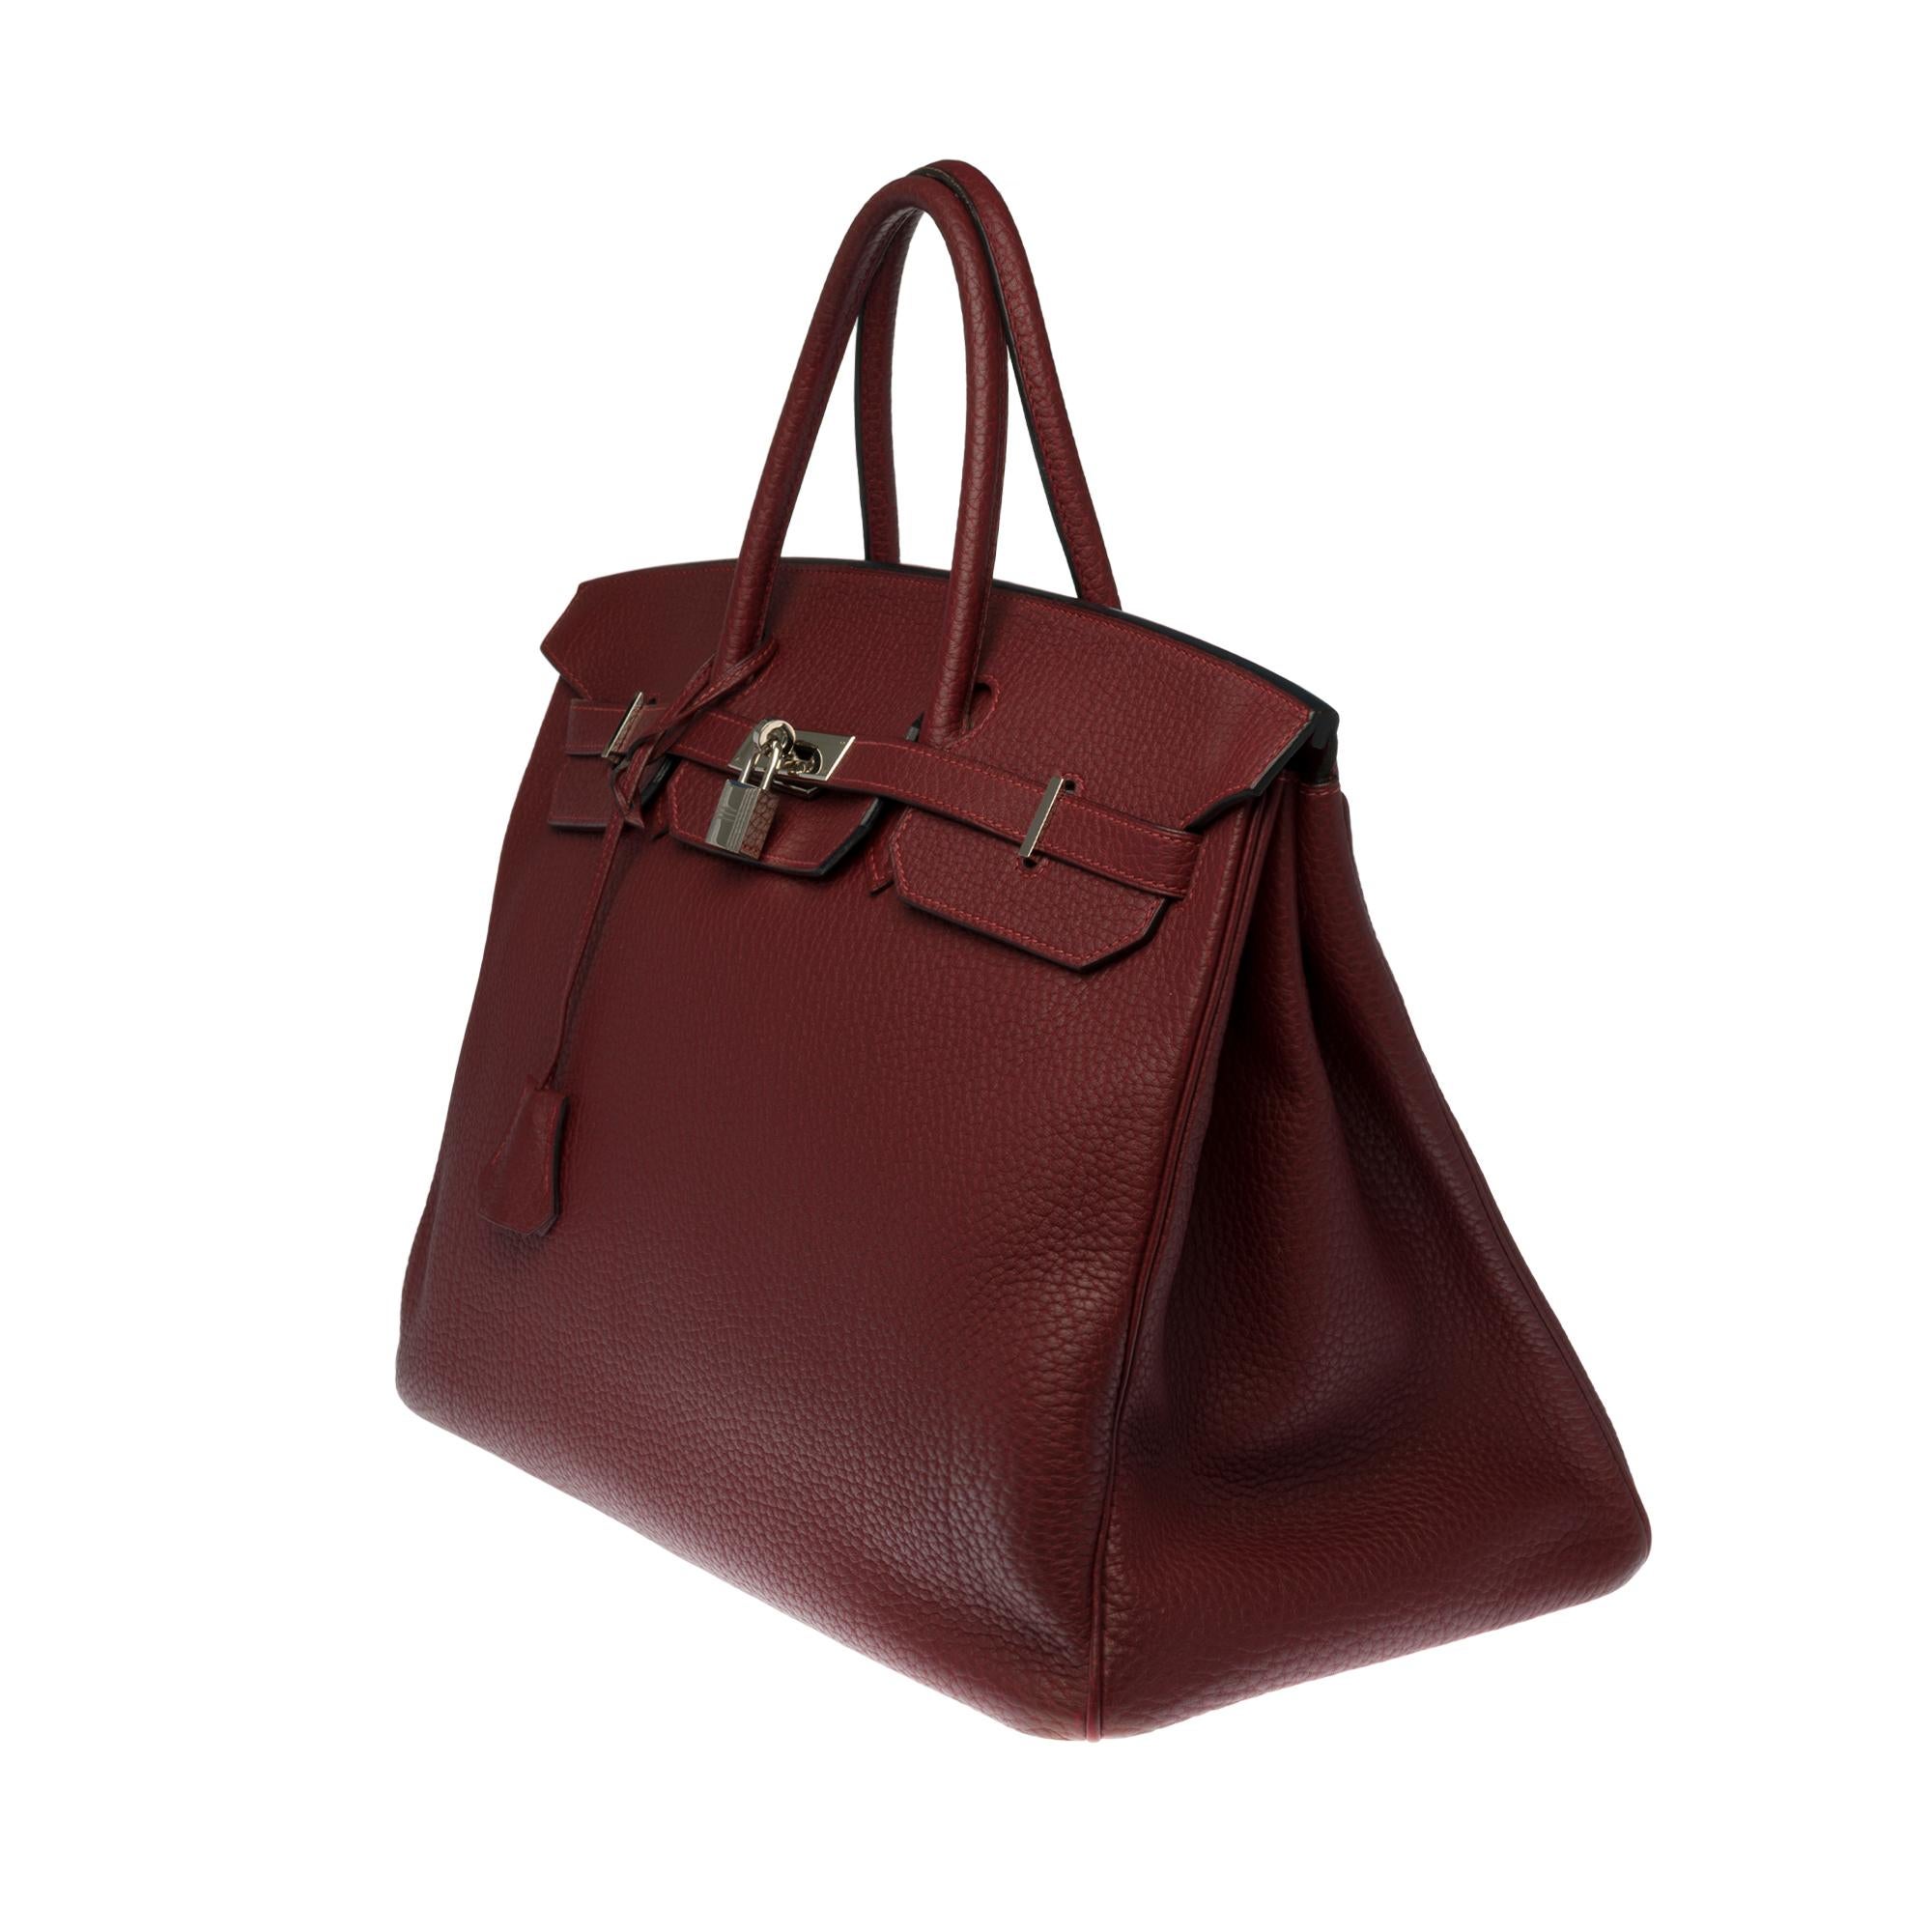 Brown Stunning Hermes Birkin 40cm handbag in burgundy Fjord leather, silver hardware